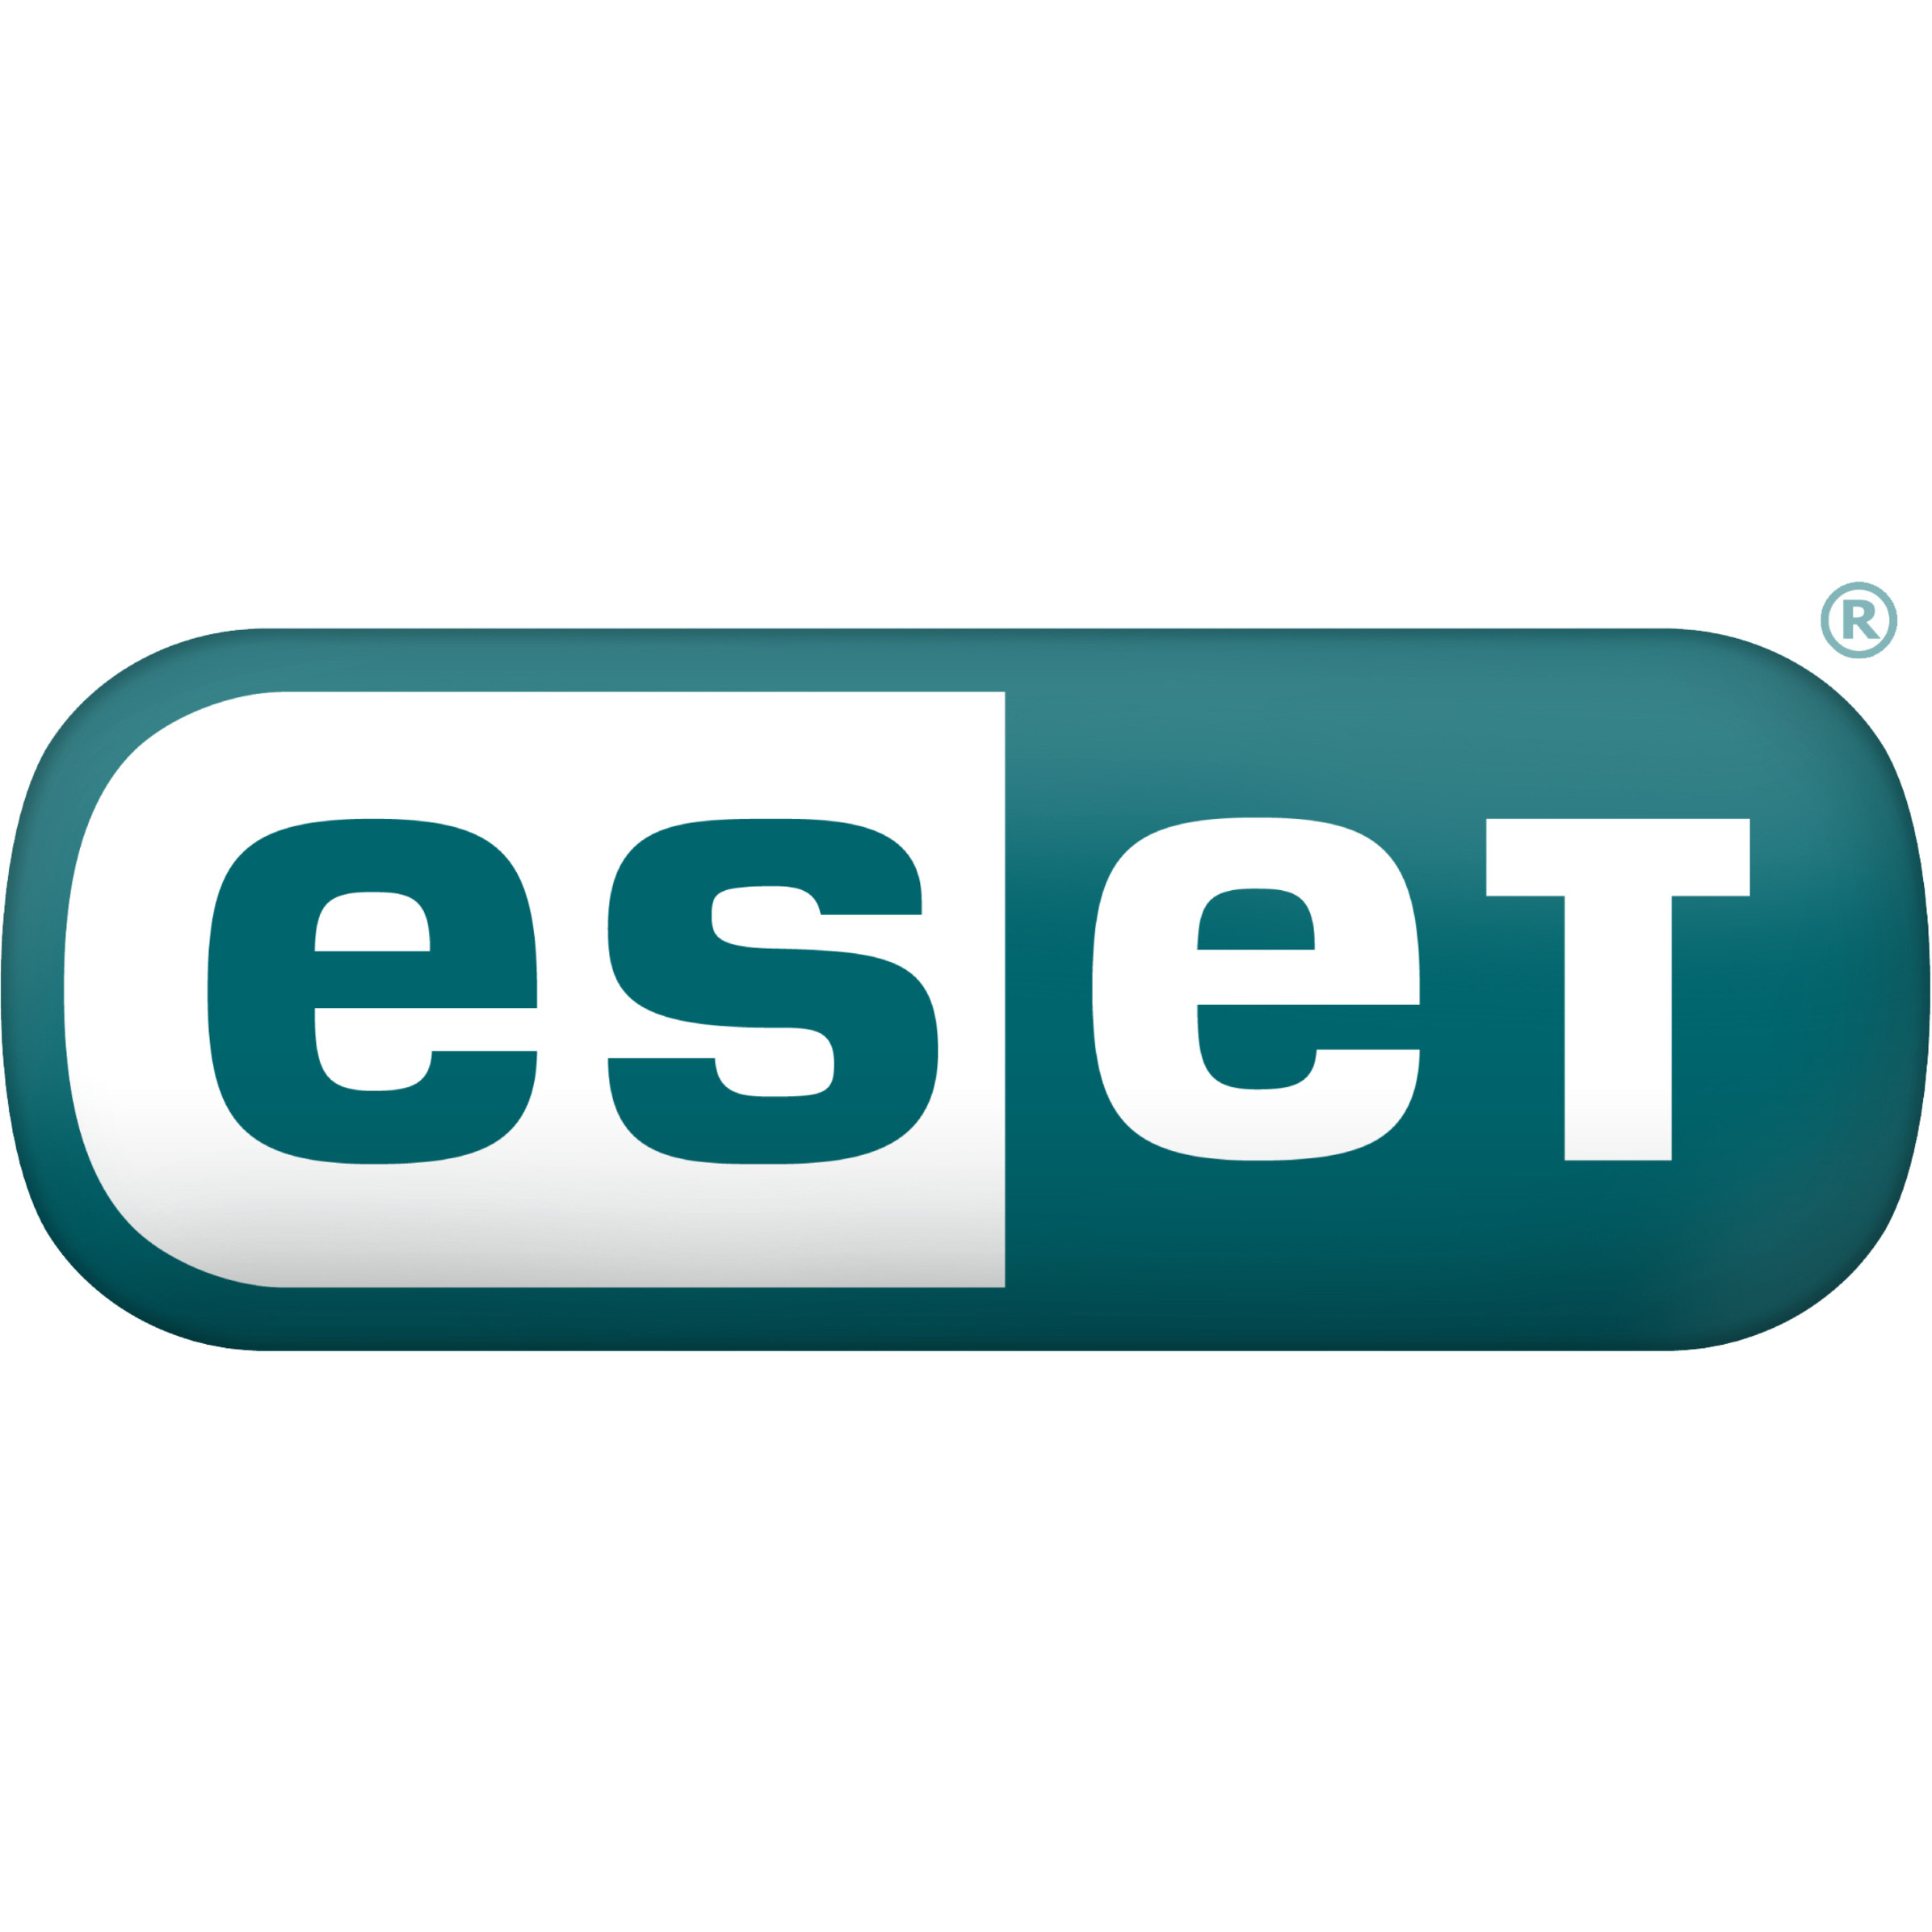 ESET PROTECT AdvancedSubscription License 5 DevicePC, Mac, Handheld